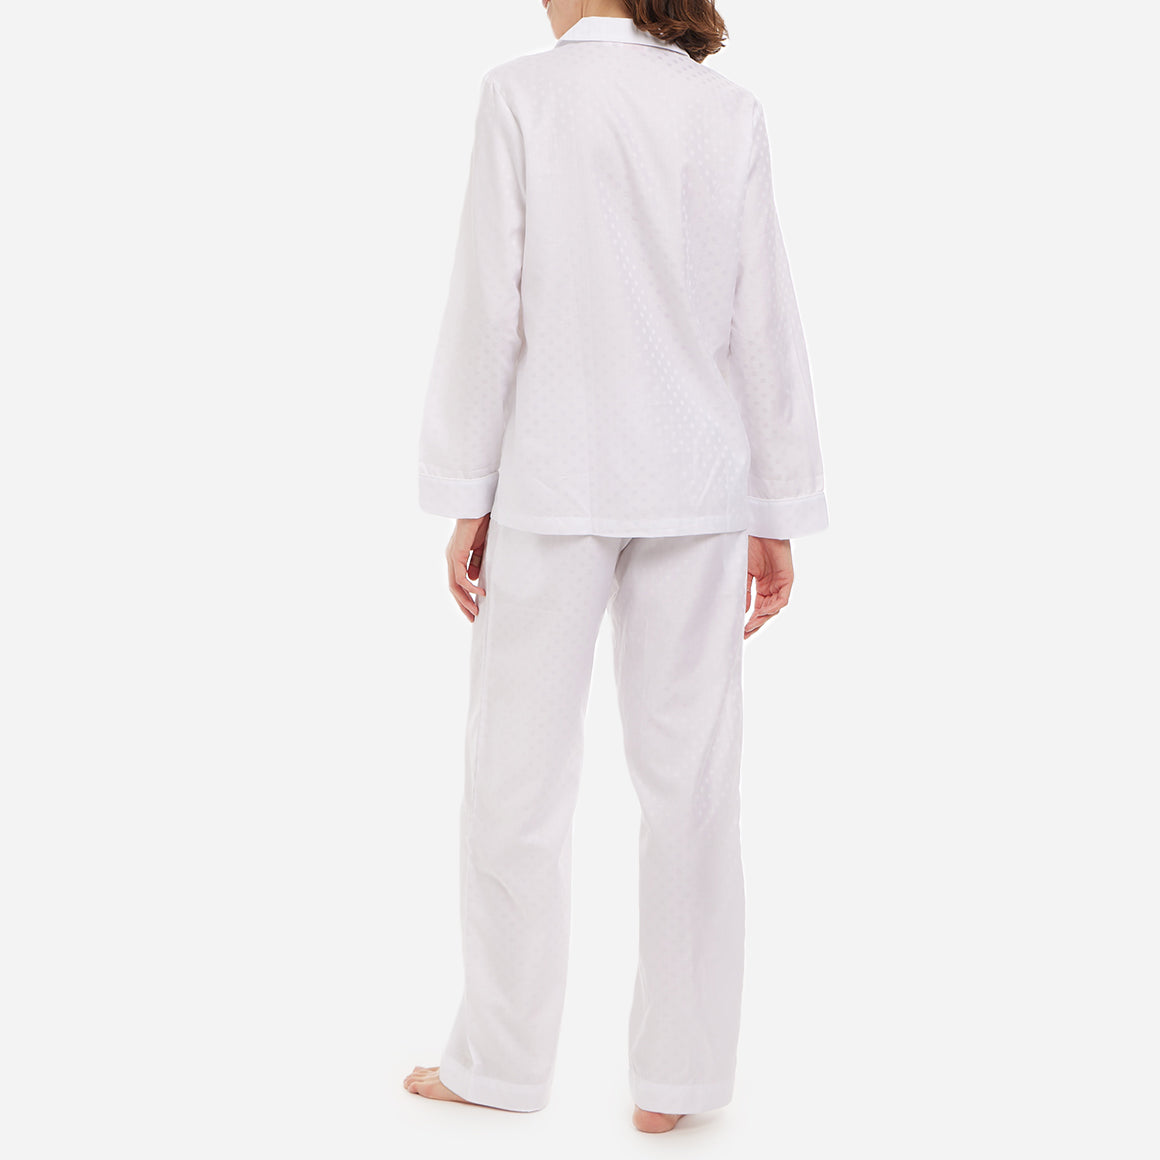 A back-facing model is wearing a long pajama set made of white polka dot cotton jacquard.